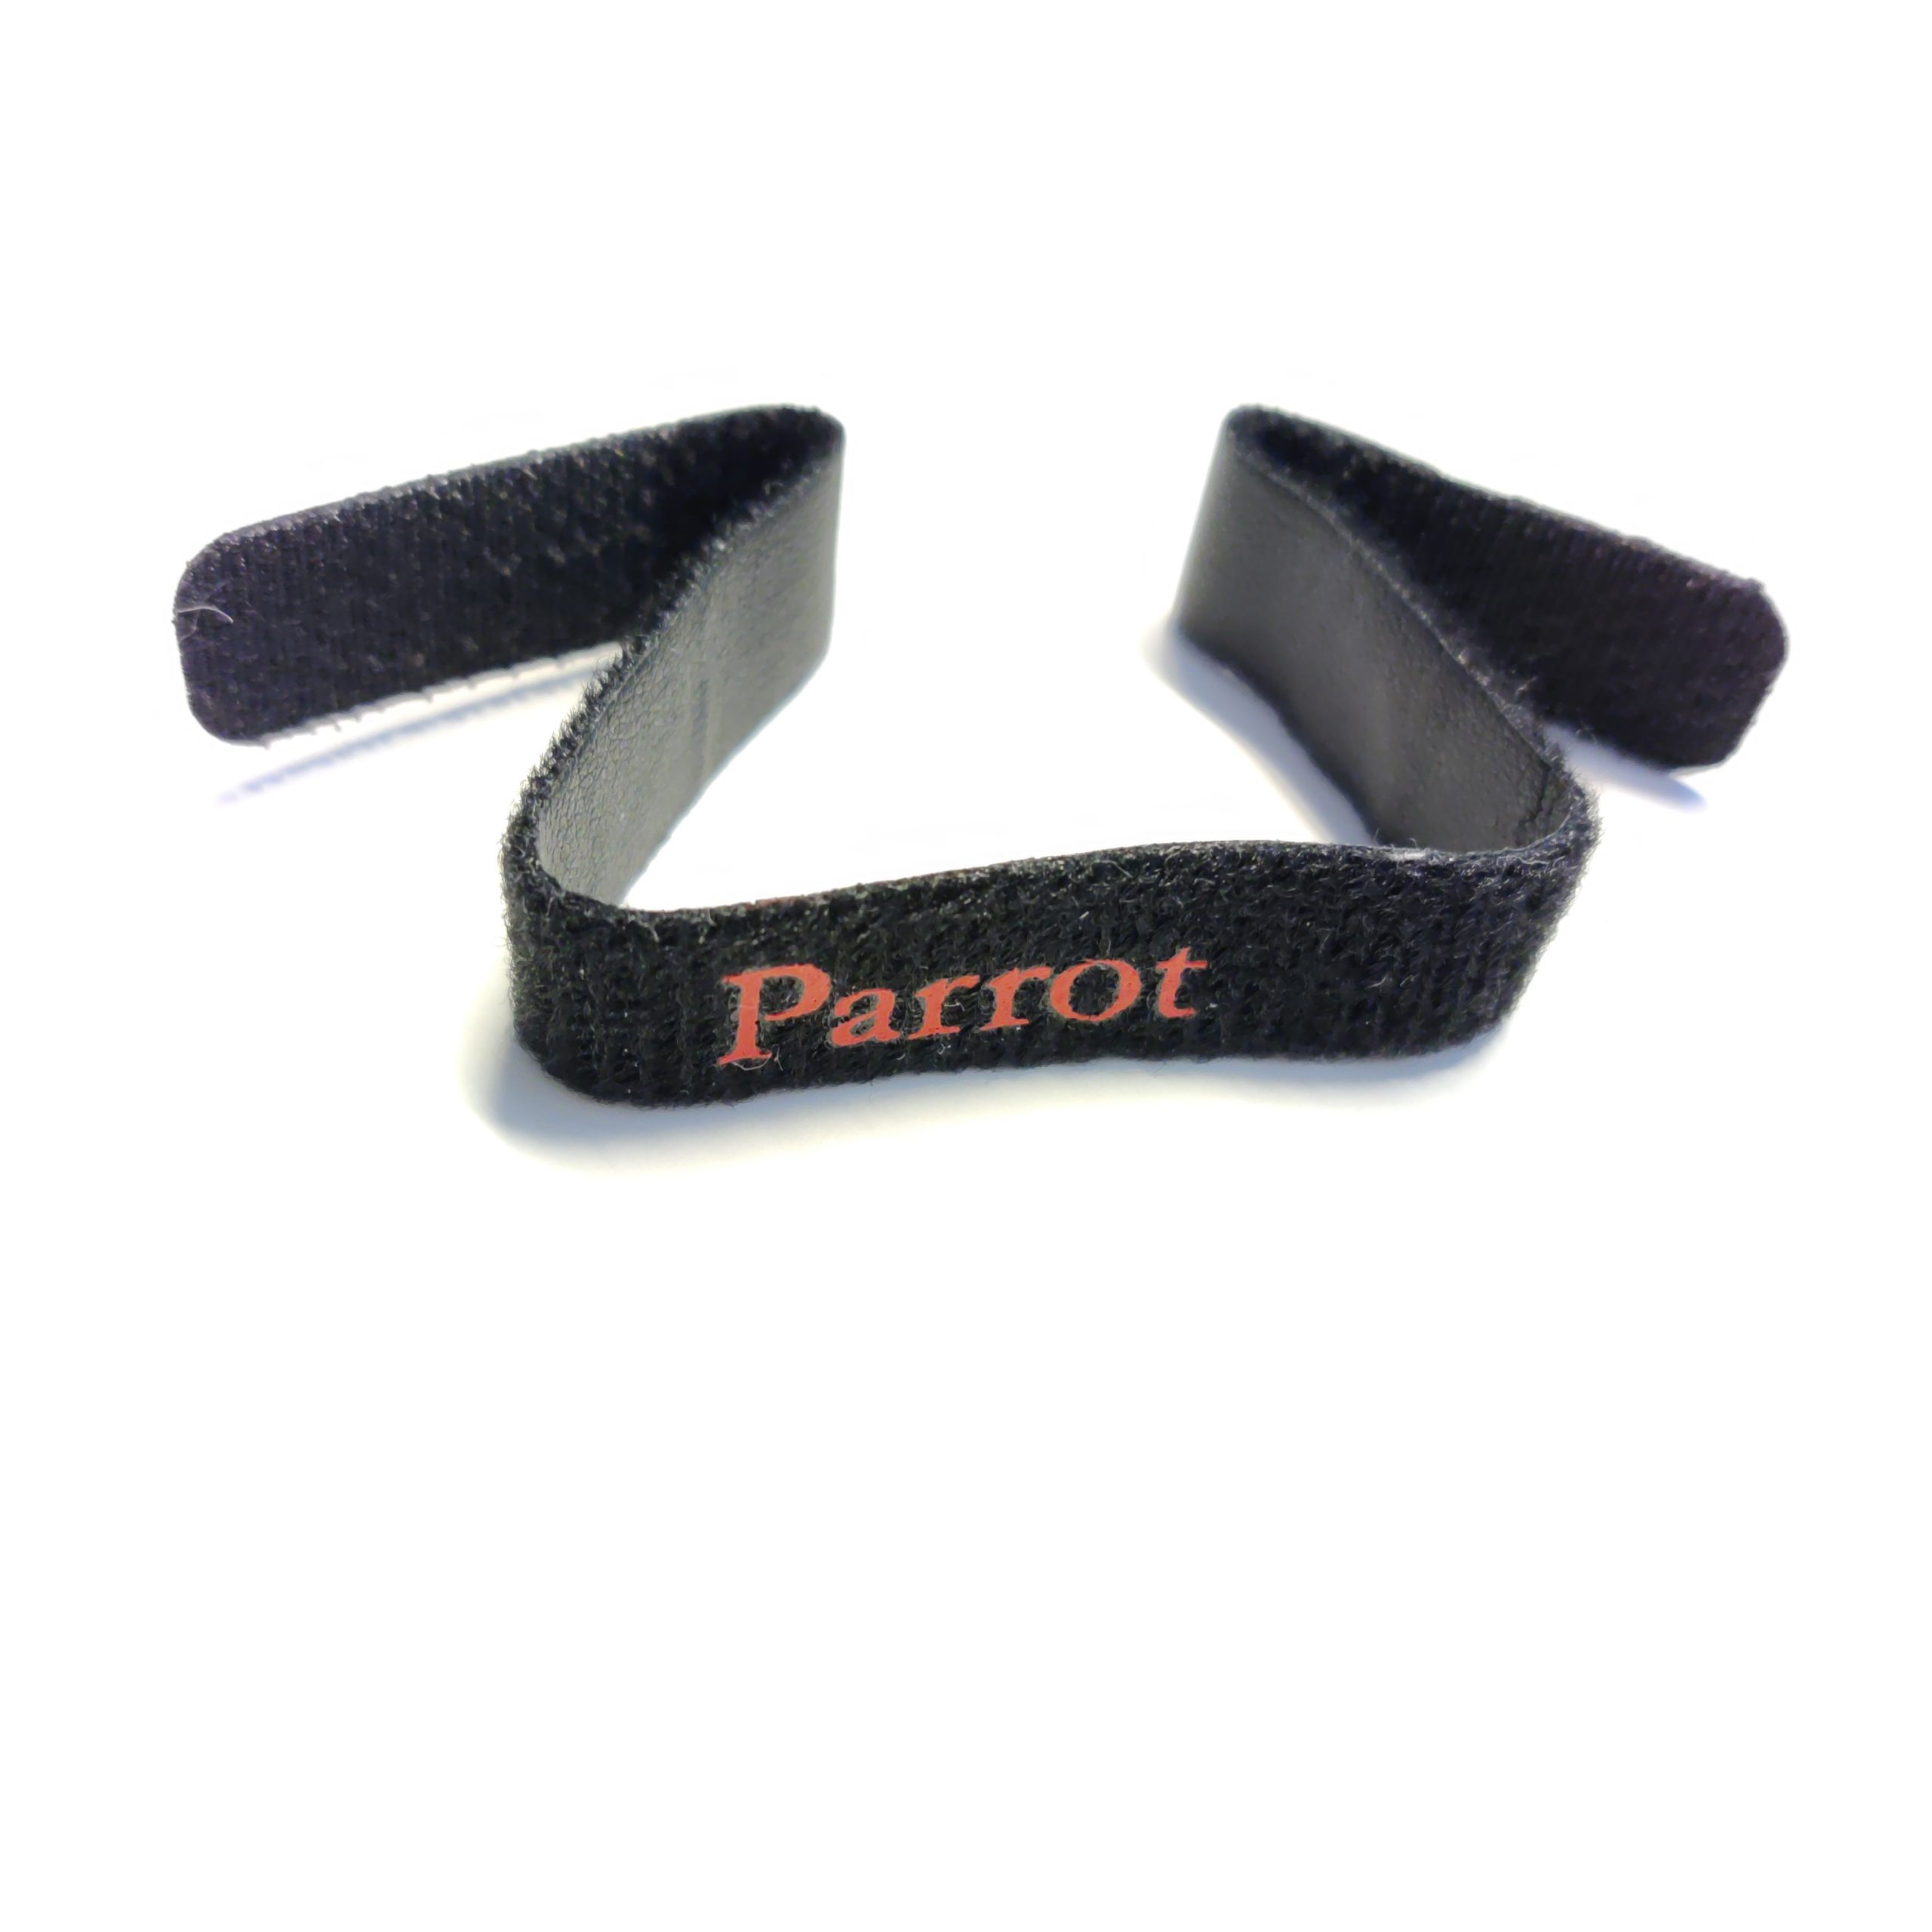 Parrot Bebop Battery Holder - Parrot bebop drone Stratch - Bebop 1 fascetta batteria - Ricambi Parrot bebop drone. Centro assistenza Parrot.